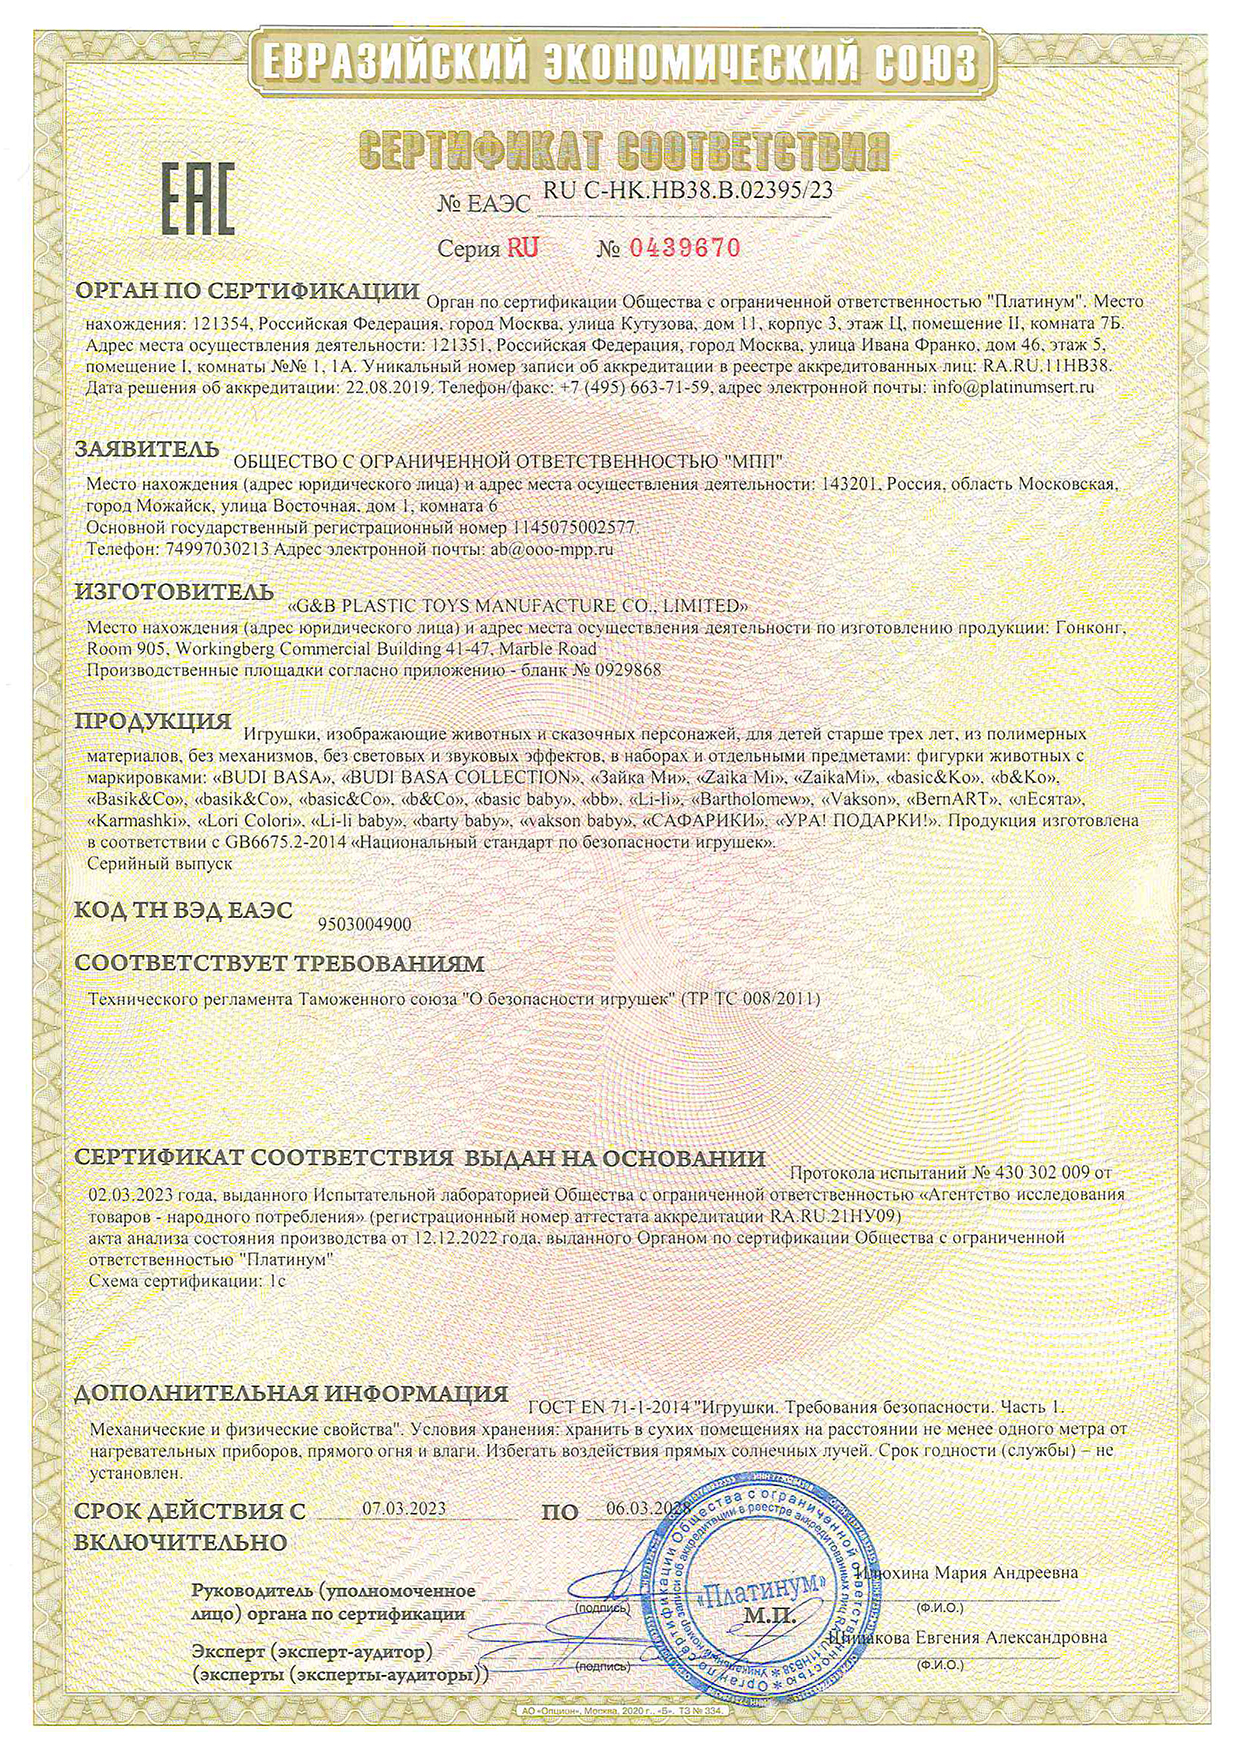 Сертификат соответствия (МИНИ)